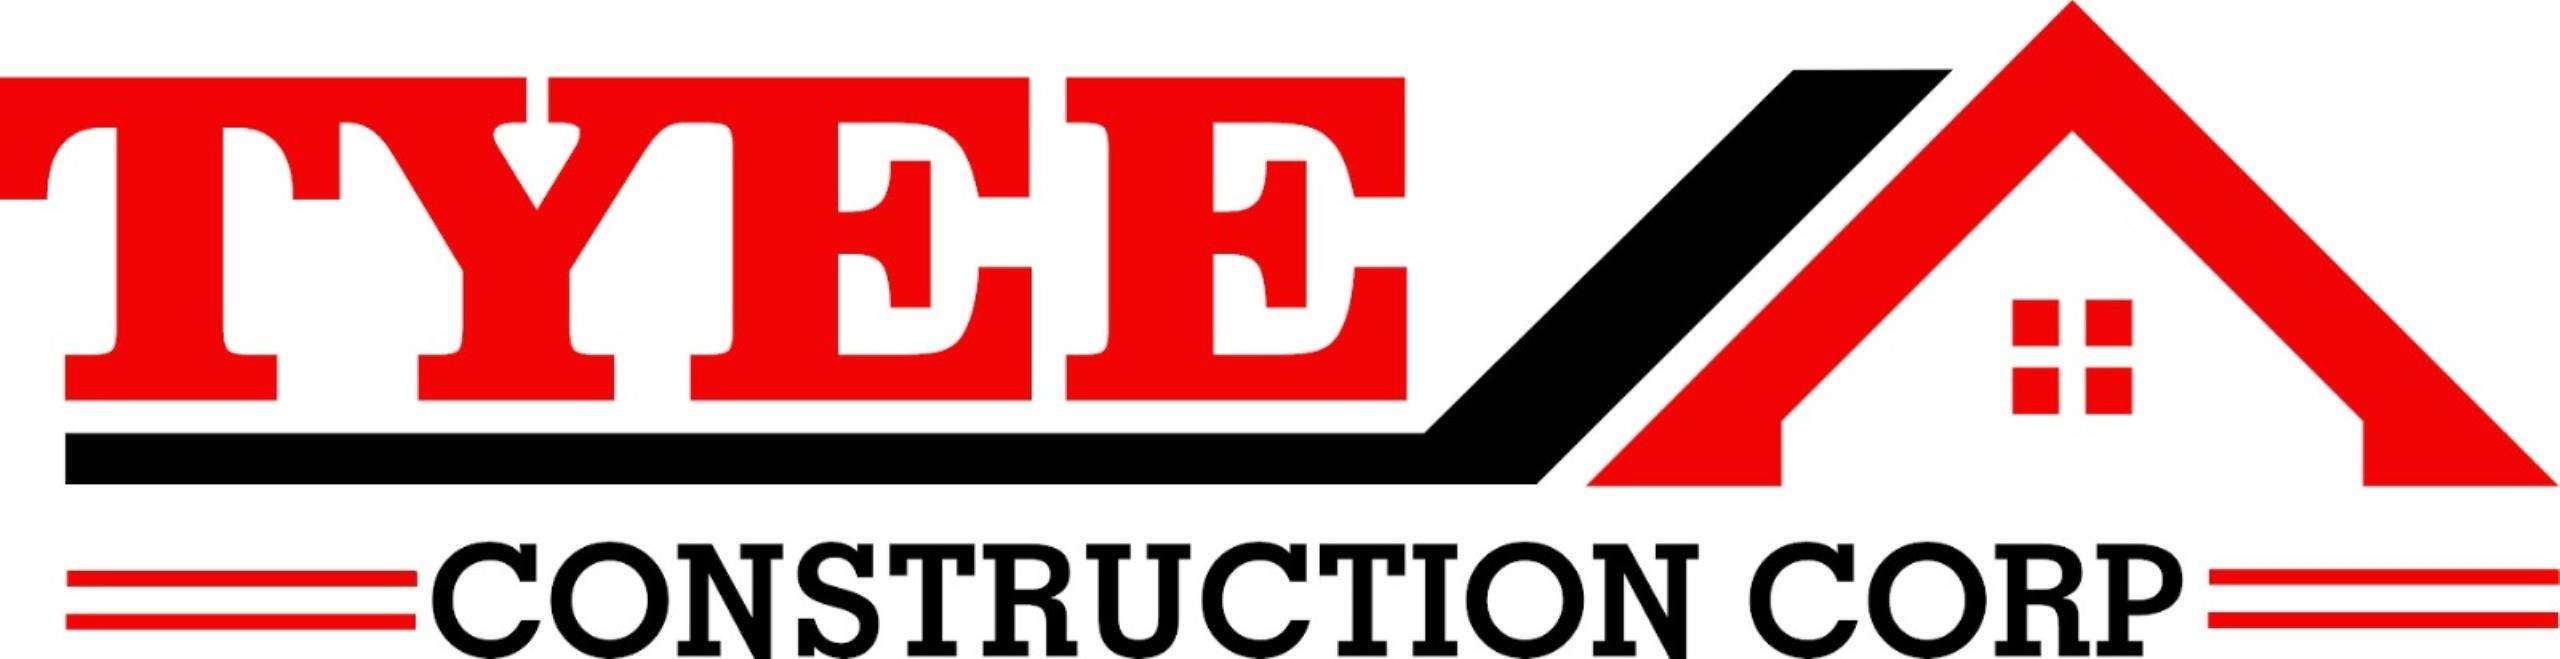 Tyee Construction Corp Logo